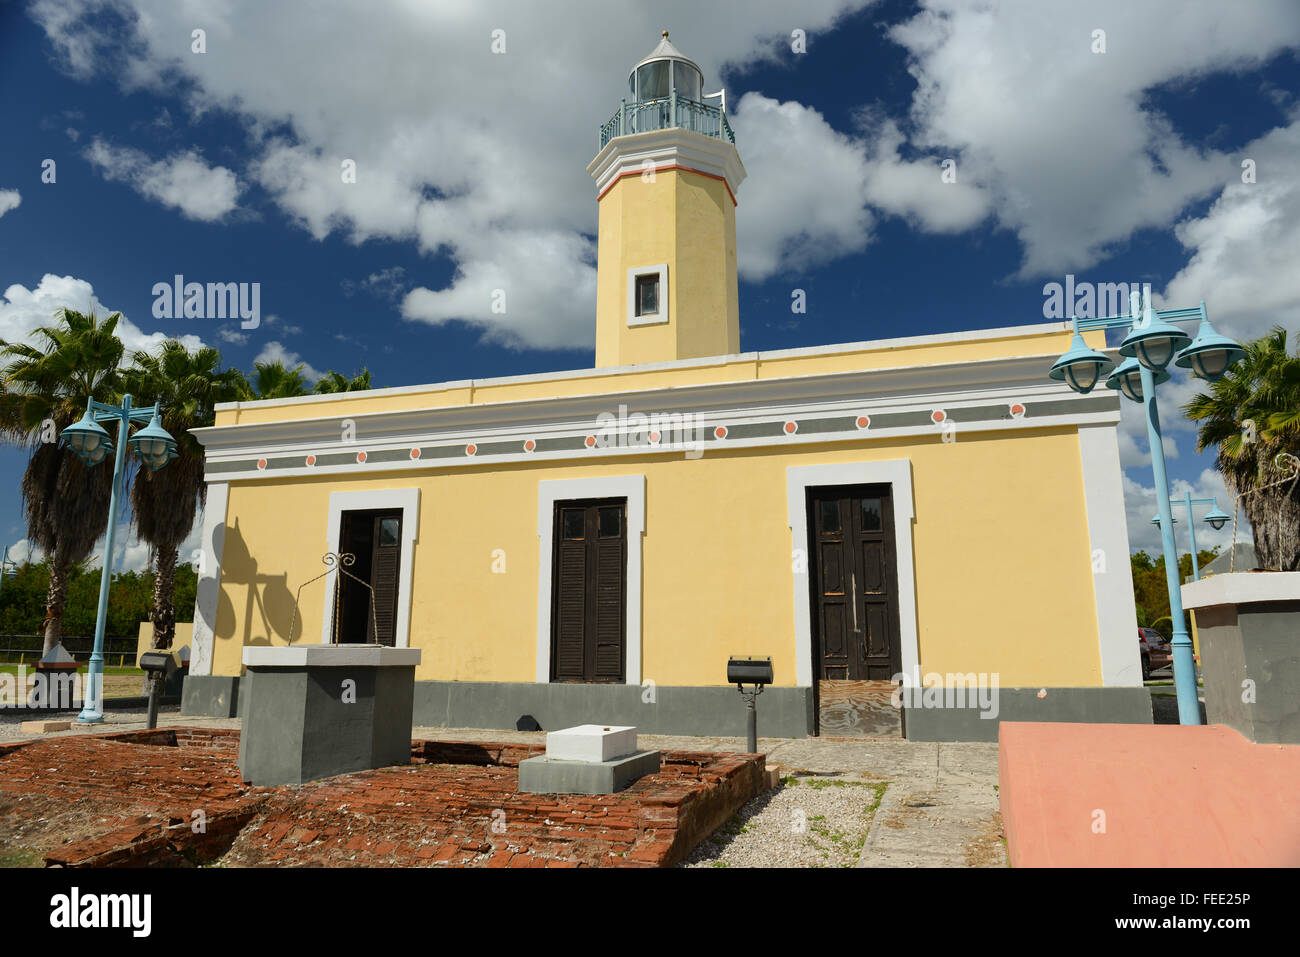 Faro Punta de las Figuras is a historic lighthouse located in Arroyo, Puerto Rico. Caribbean Island. US territory. Stock Photo